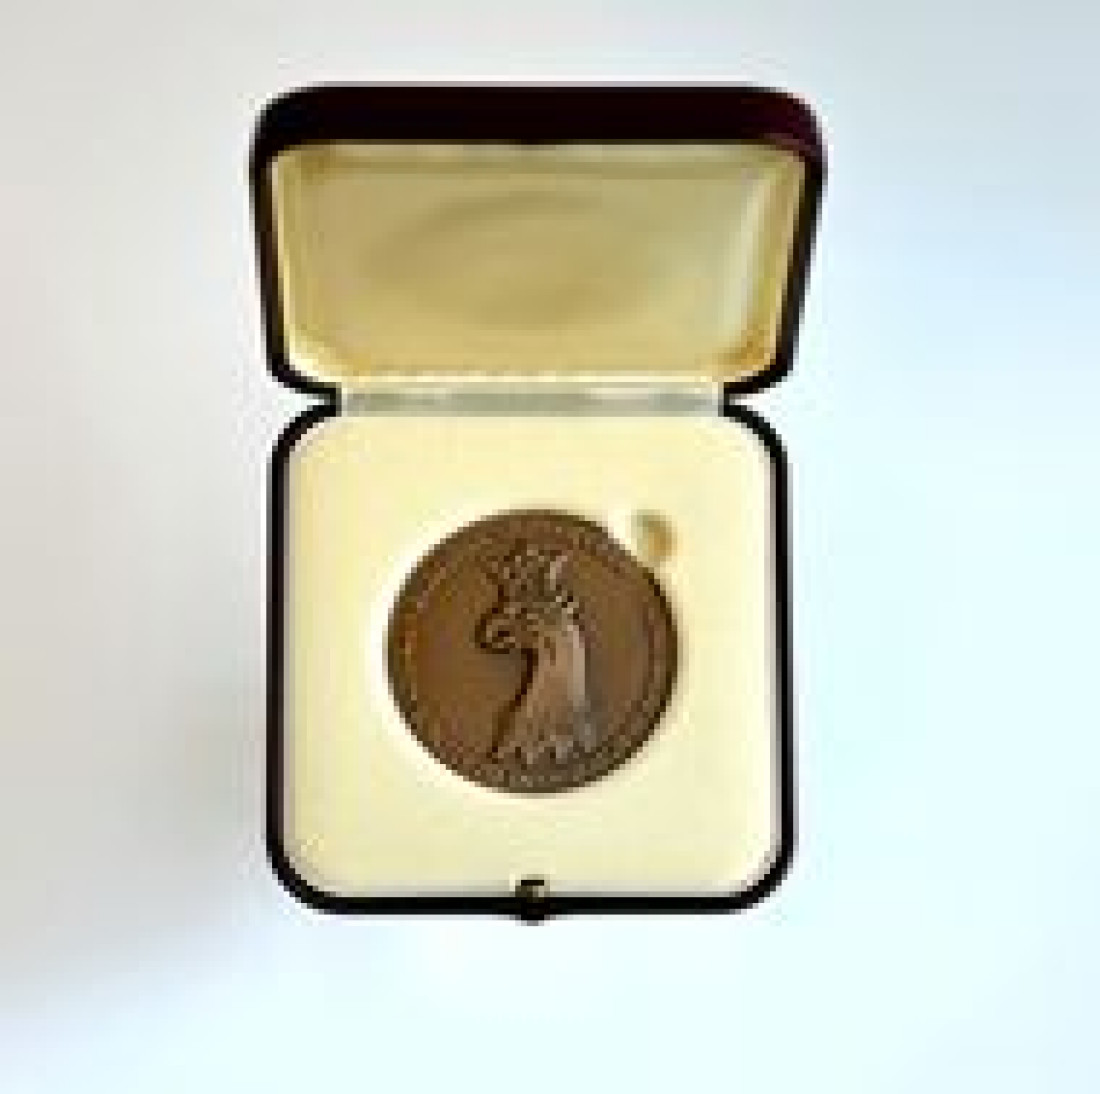 DRUTEX nagrodzony Medalem Europejskim